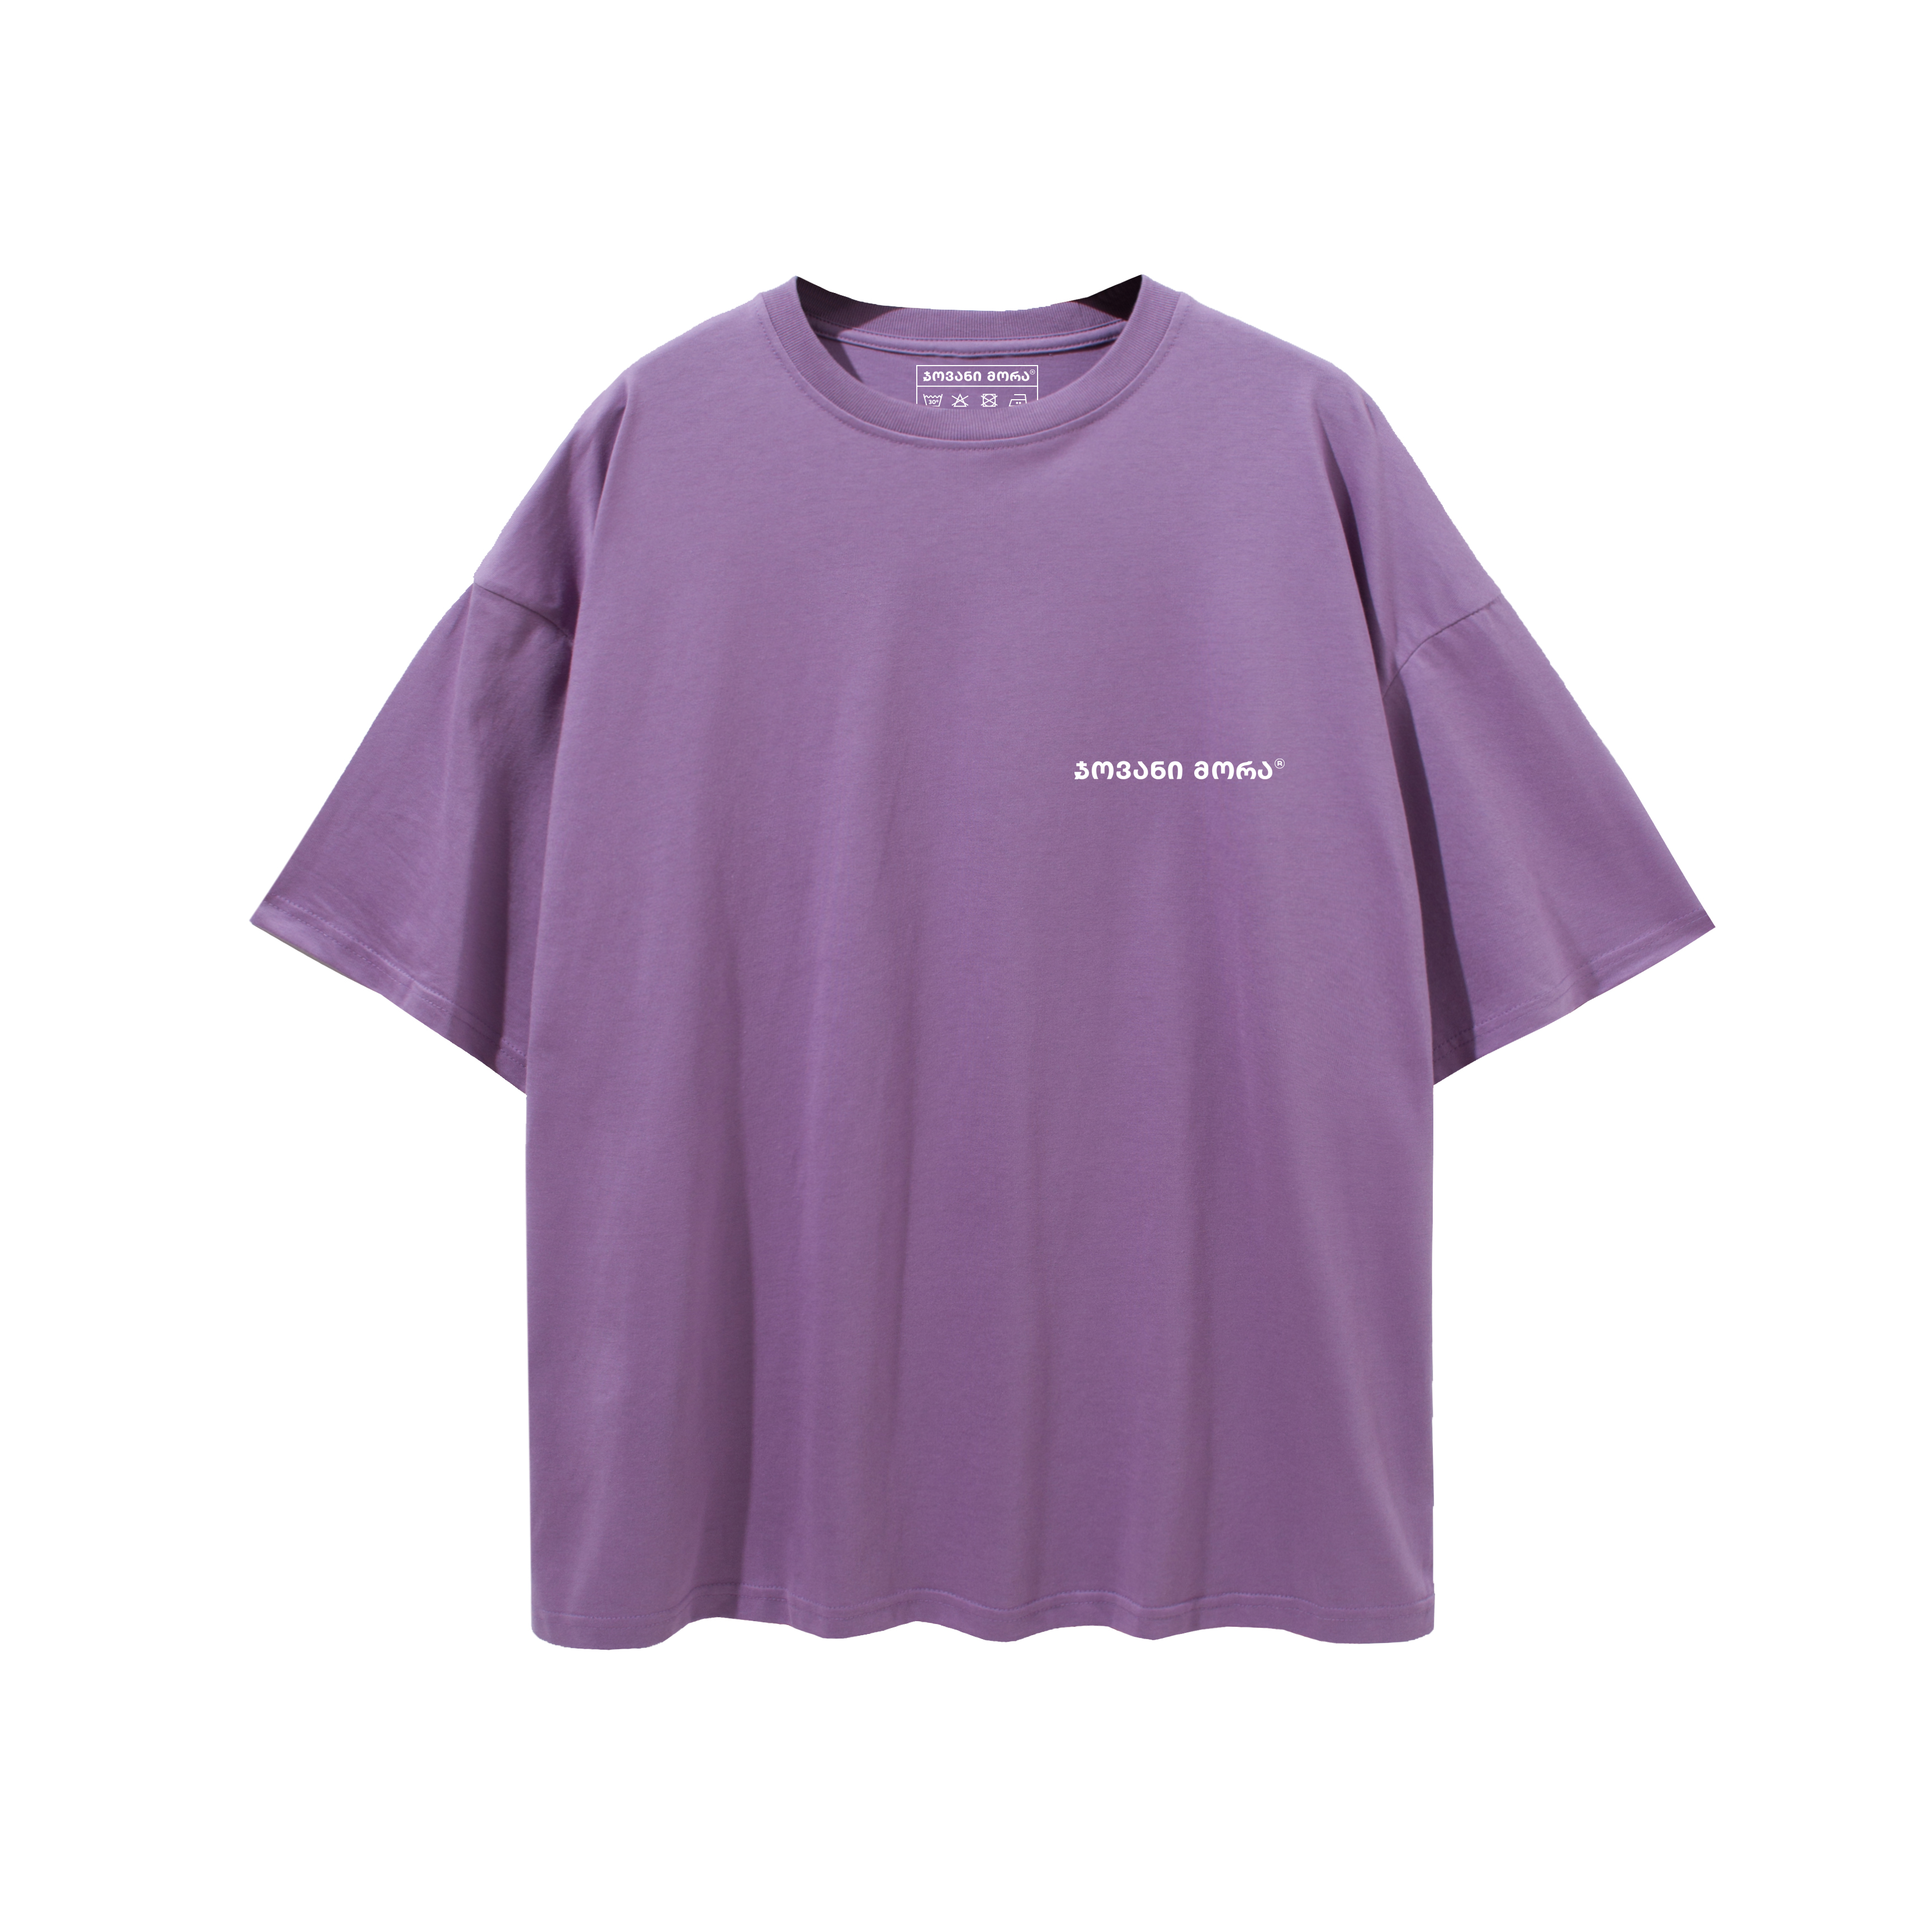 T-shirt (Purple), Oversized Fit